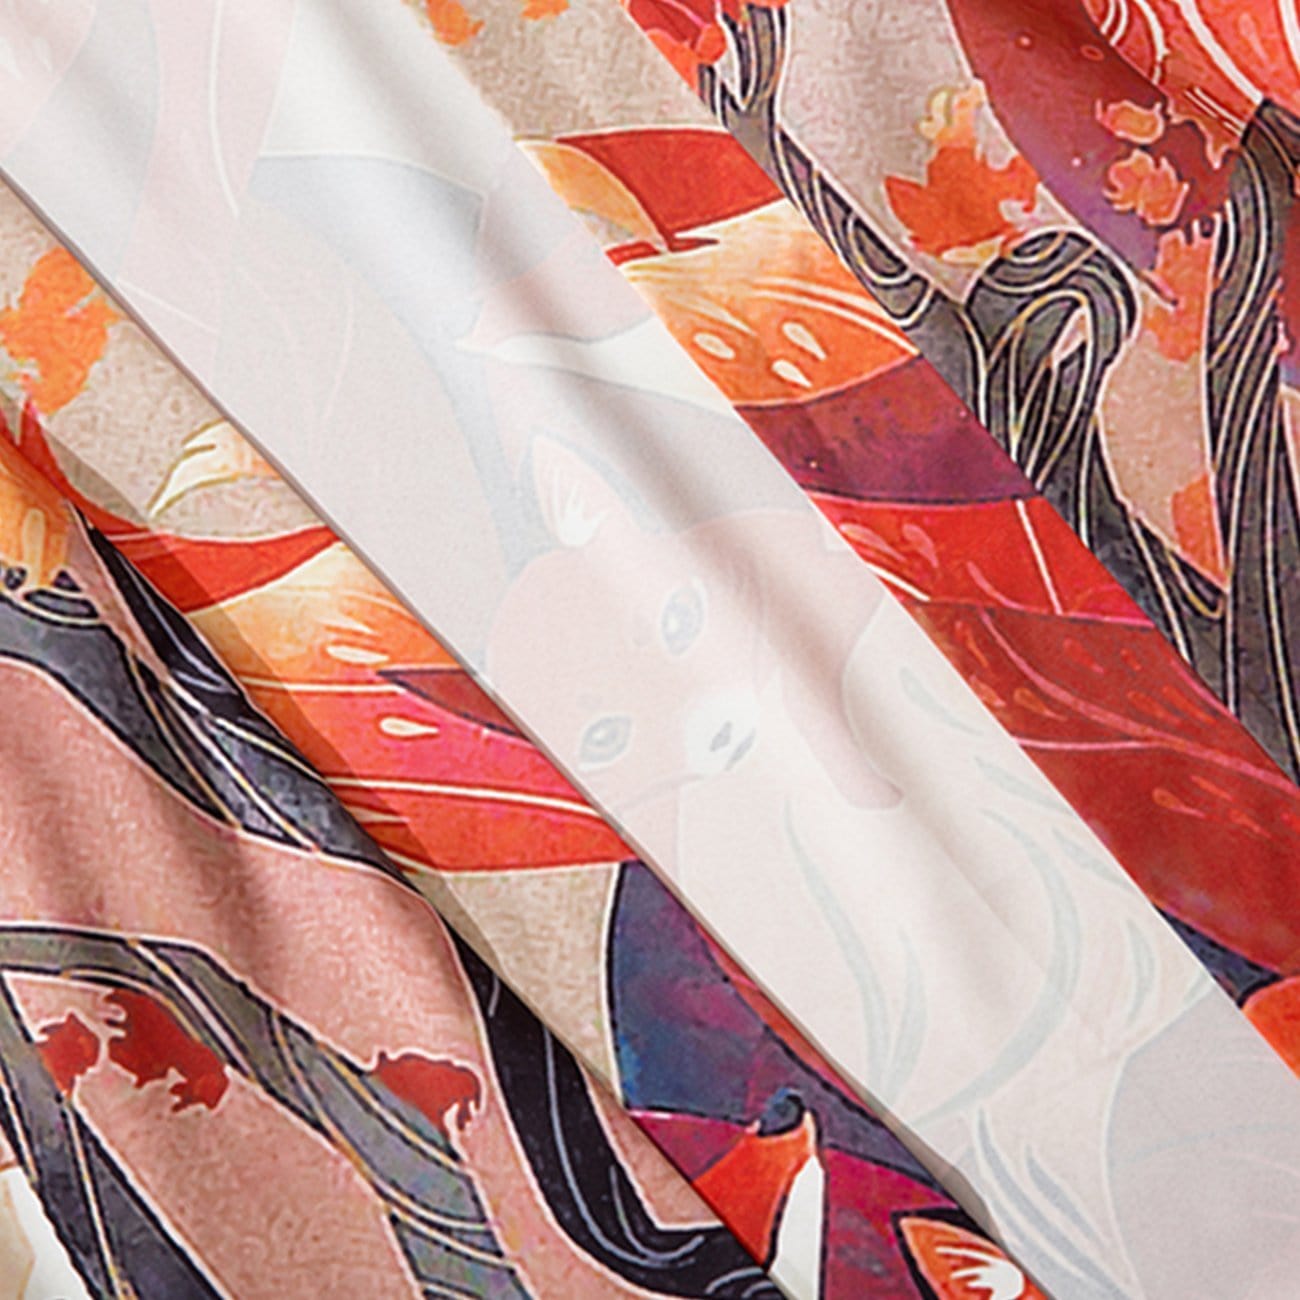 Nine Tailed Fox Print Kimono